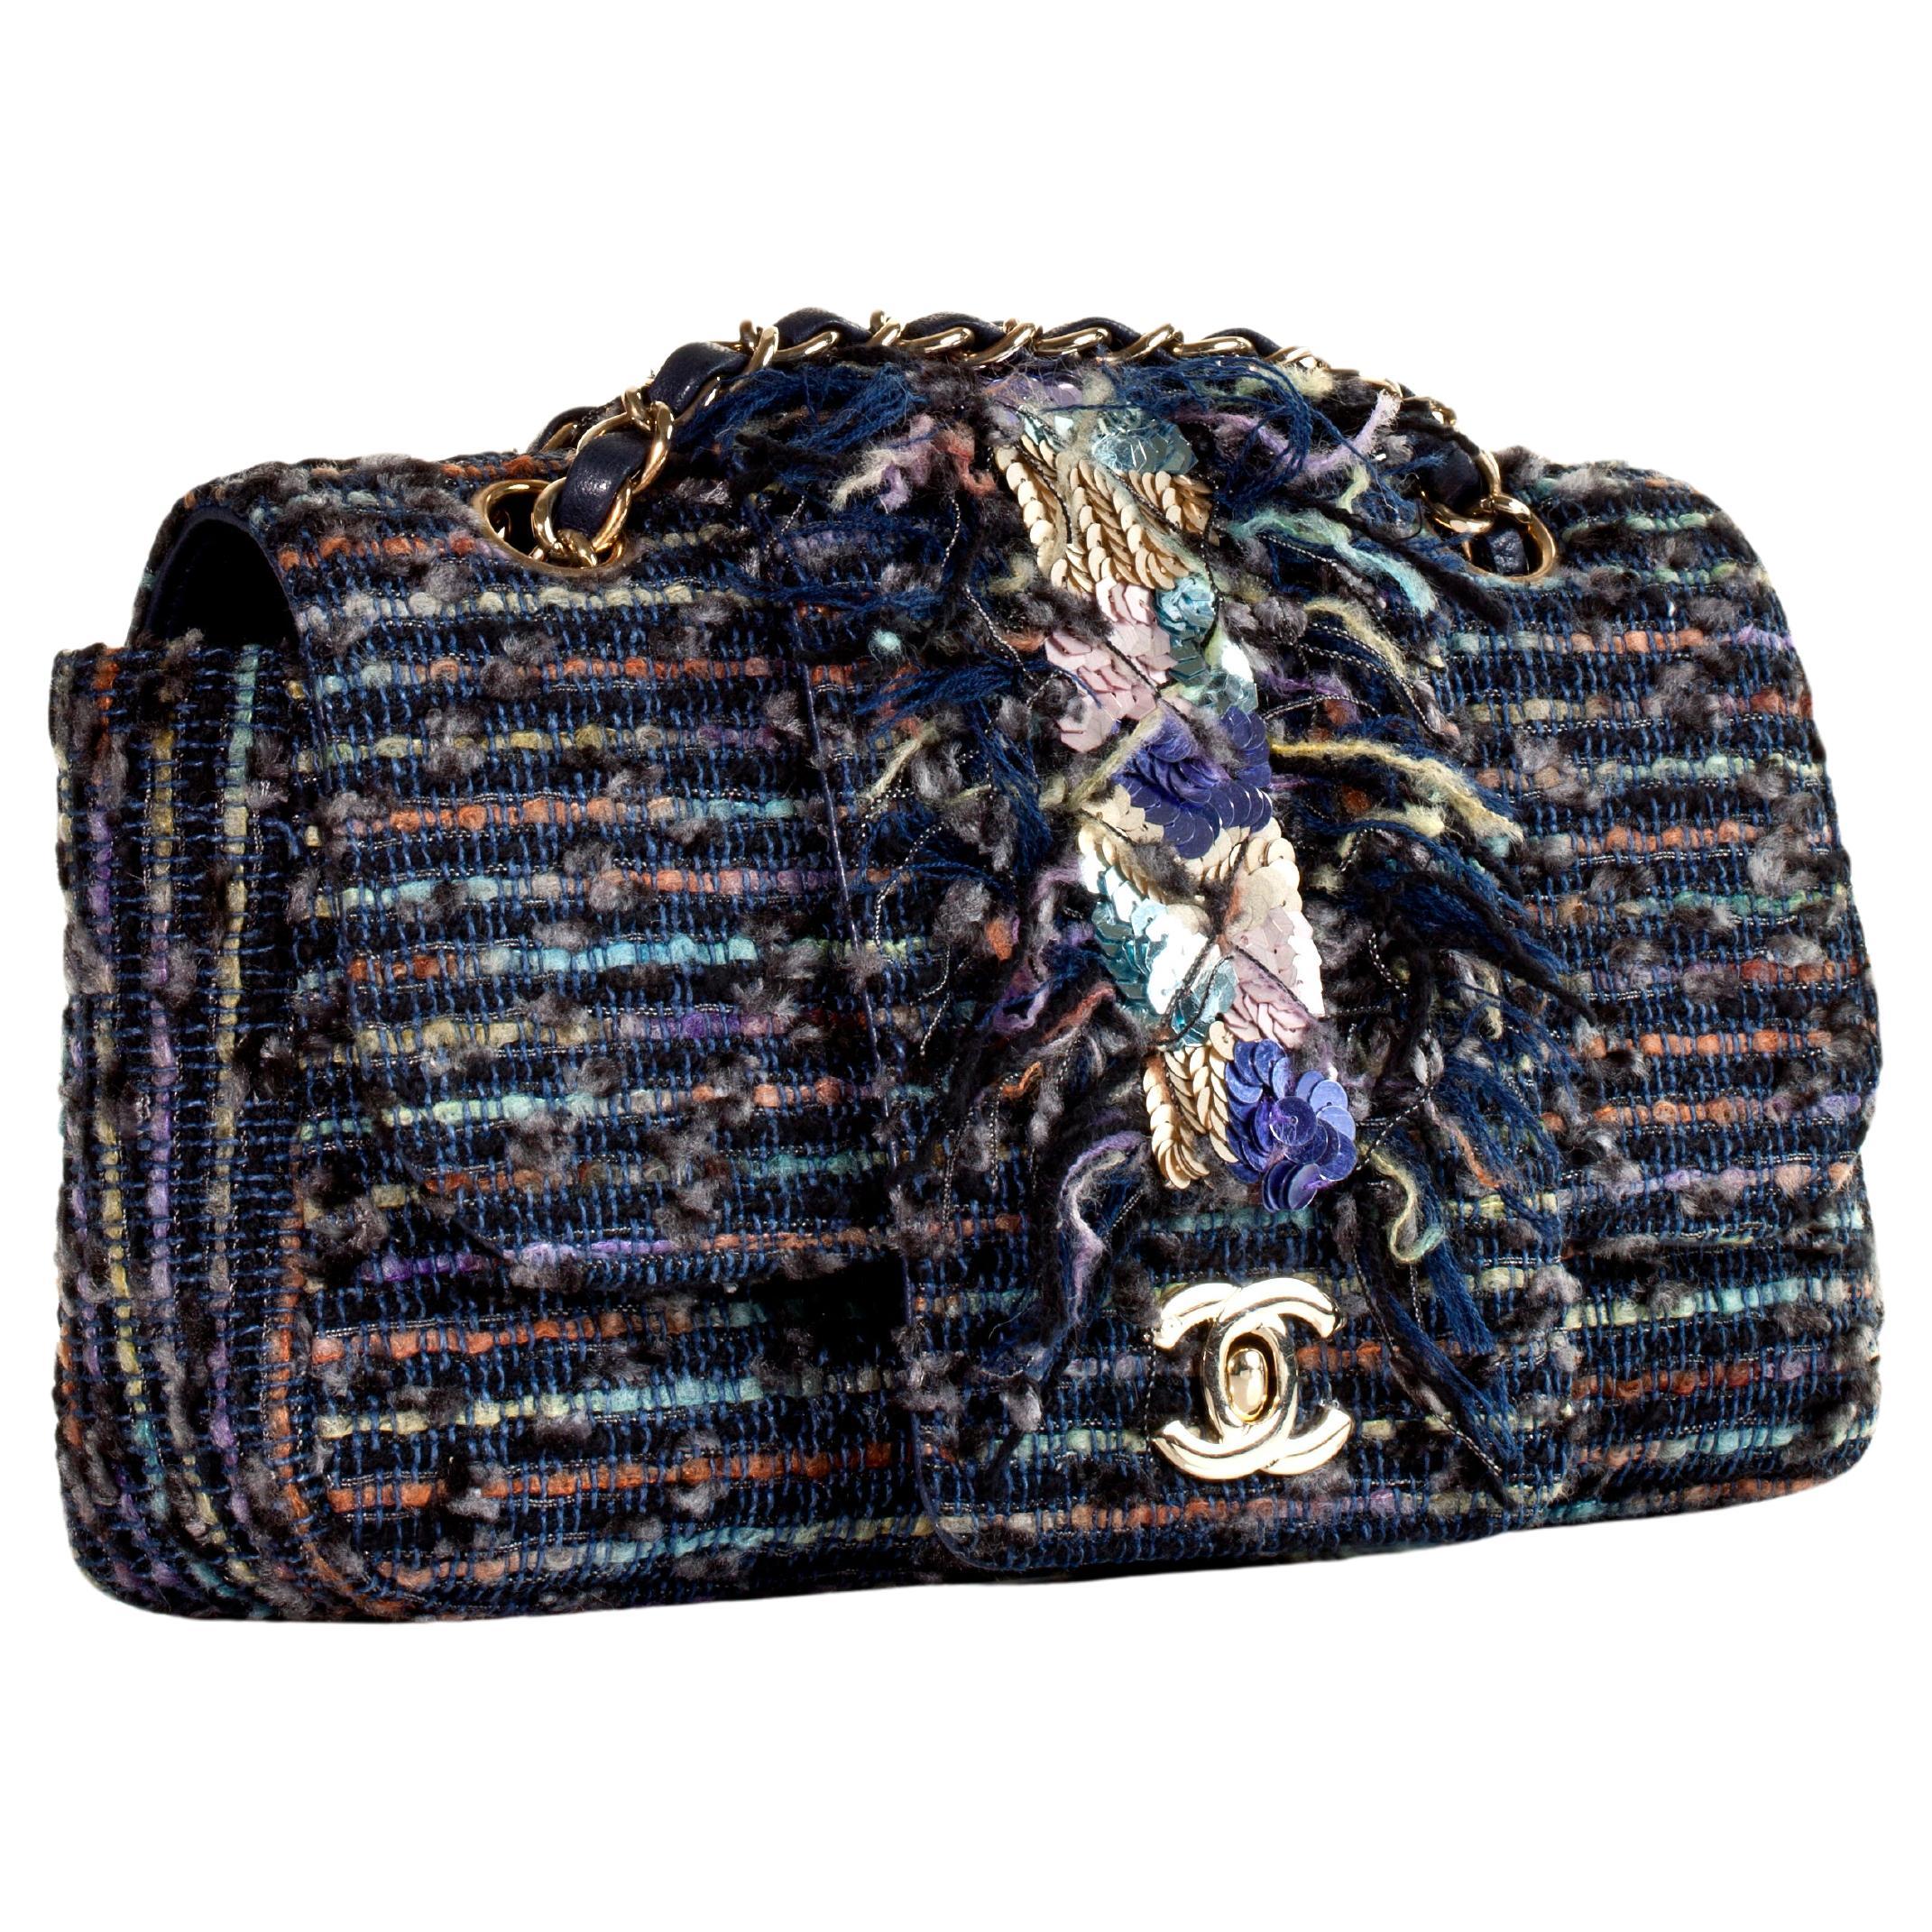 Chanel 2005 Classic Flap Vintage Jeweled Pailletten Meerjungfrau Marineblau Tweed Tasche